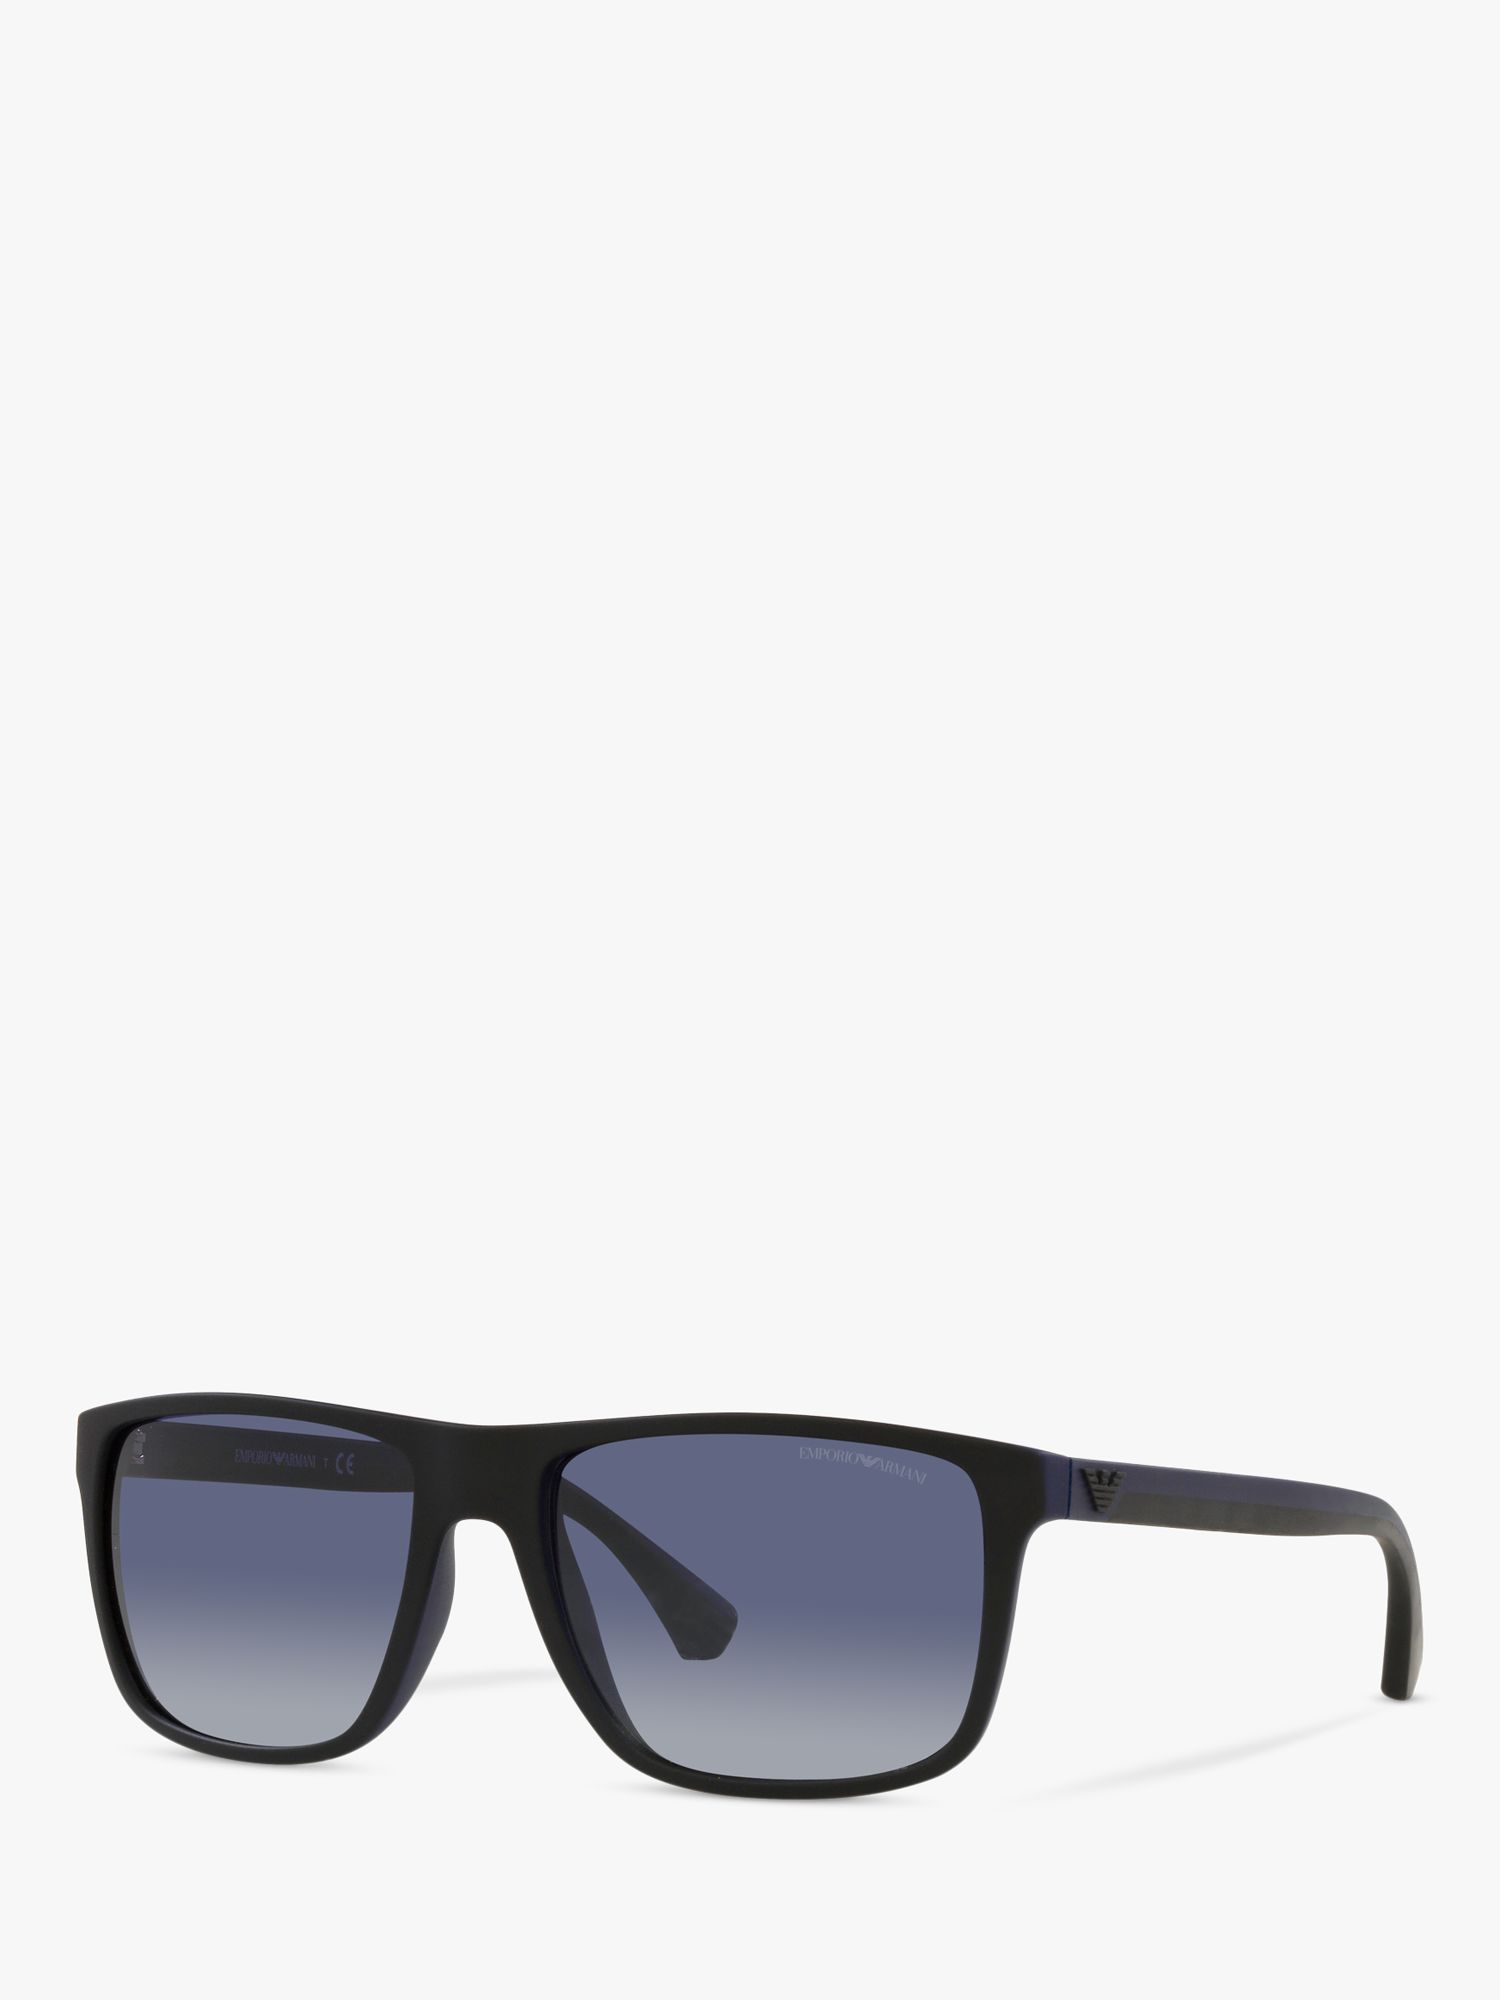 Emporio Armani EA4033 Men's Square Sunglasses, Black/Blue Gradient at John  Lewis & Partners